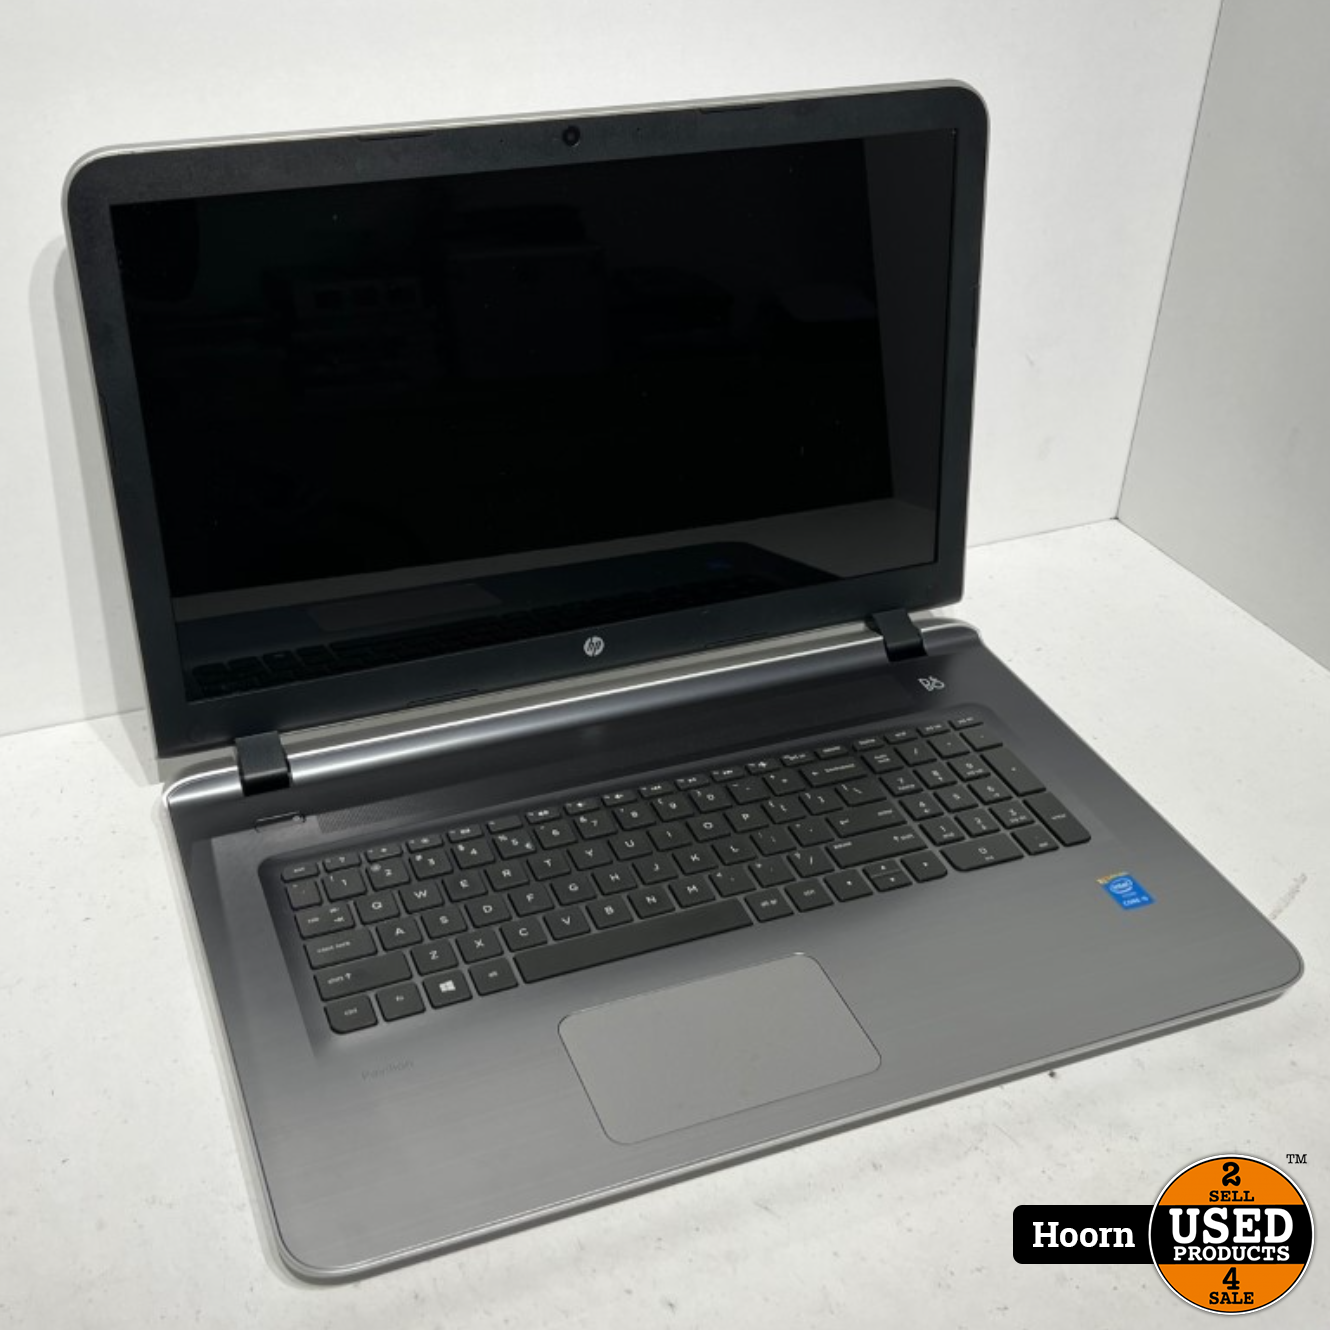 maart Buitenboordmotor Lezen HP Pavilion Notebook 17-g120nd 17 inch Laptop incl. Lader - Used Products  Hoorn